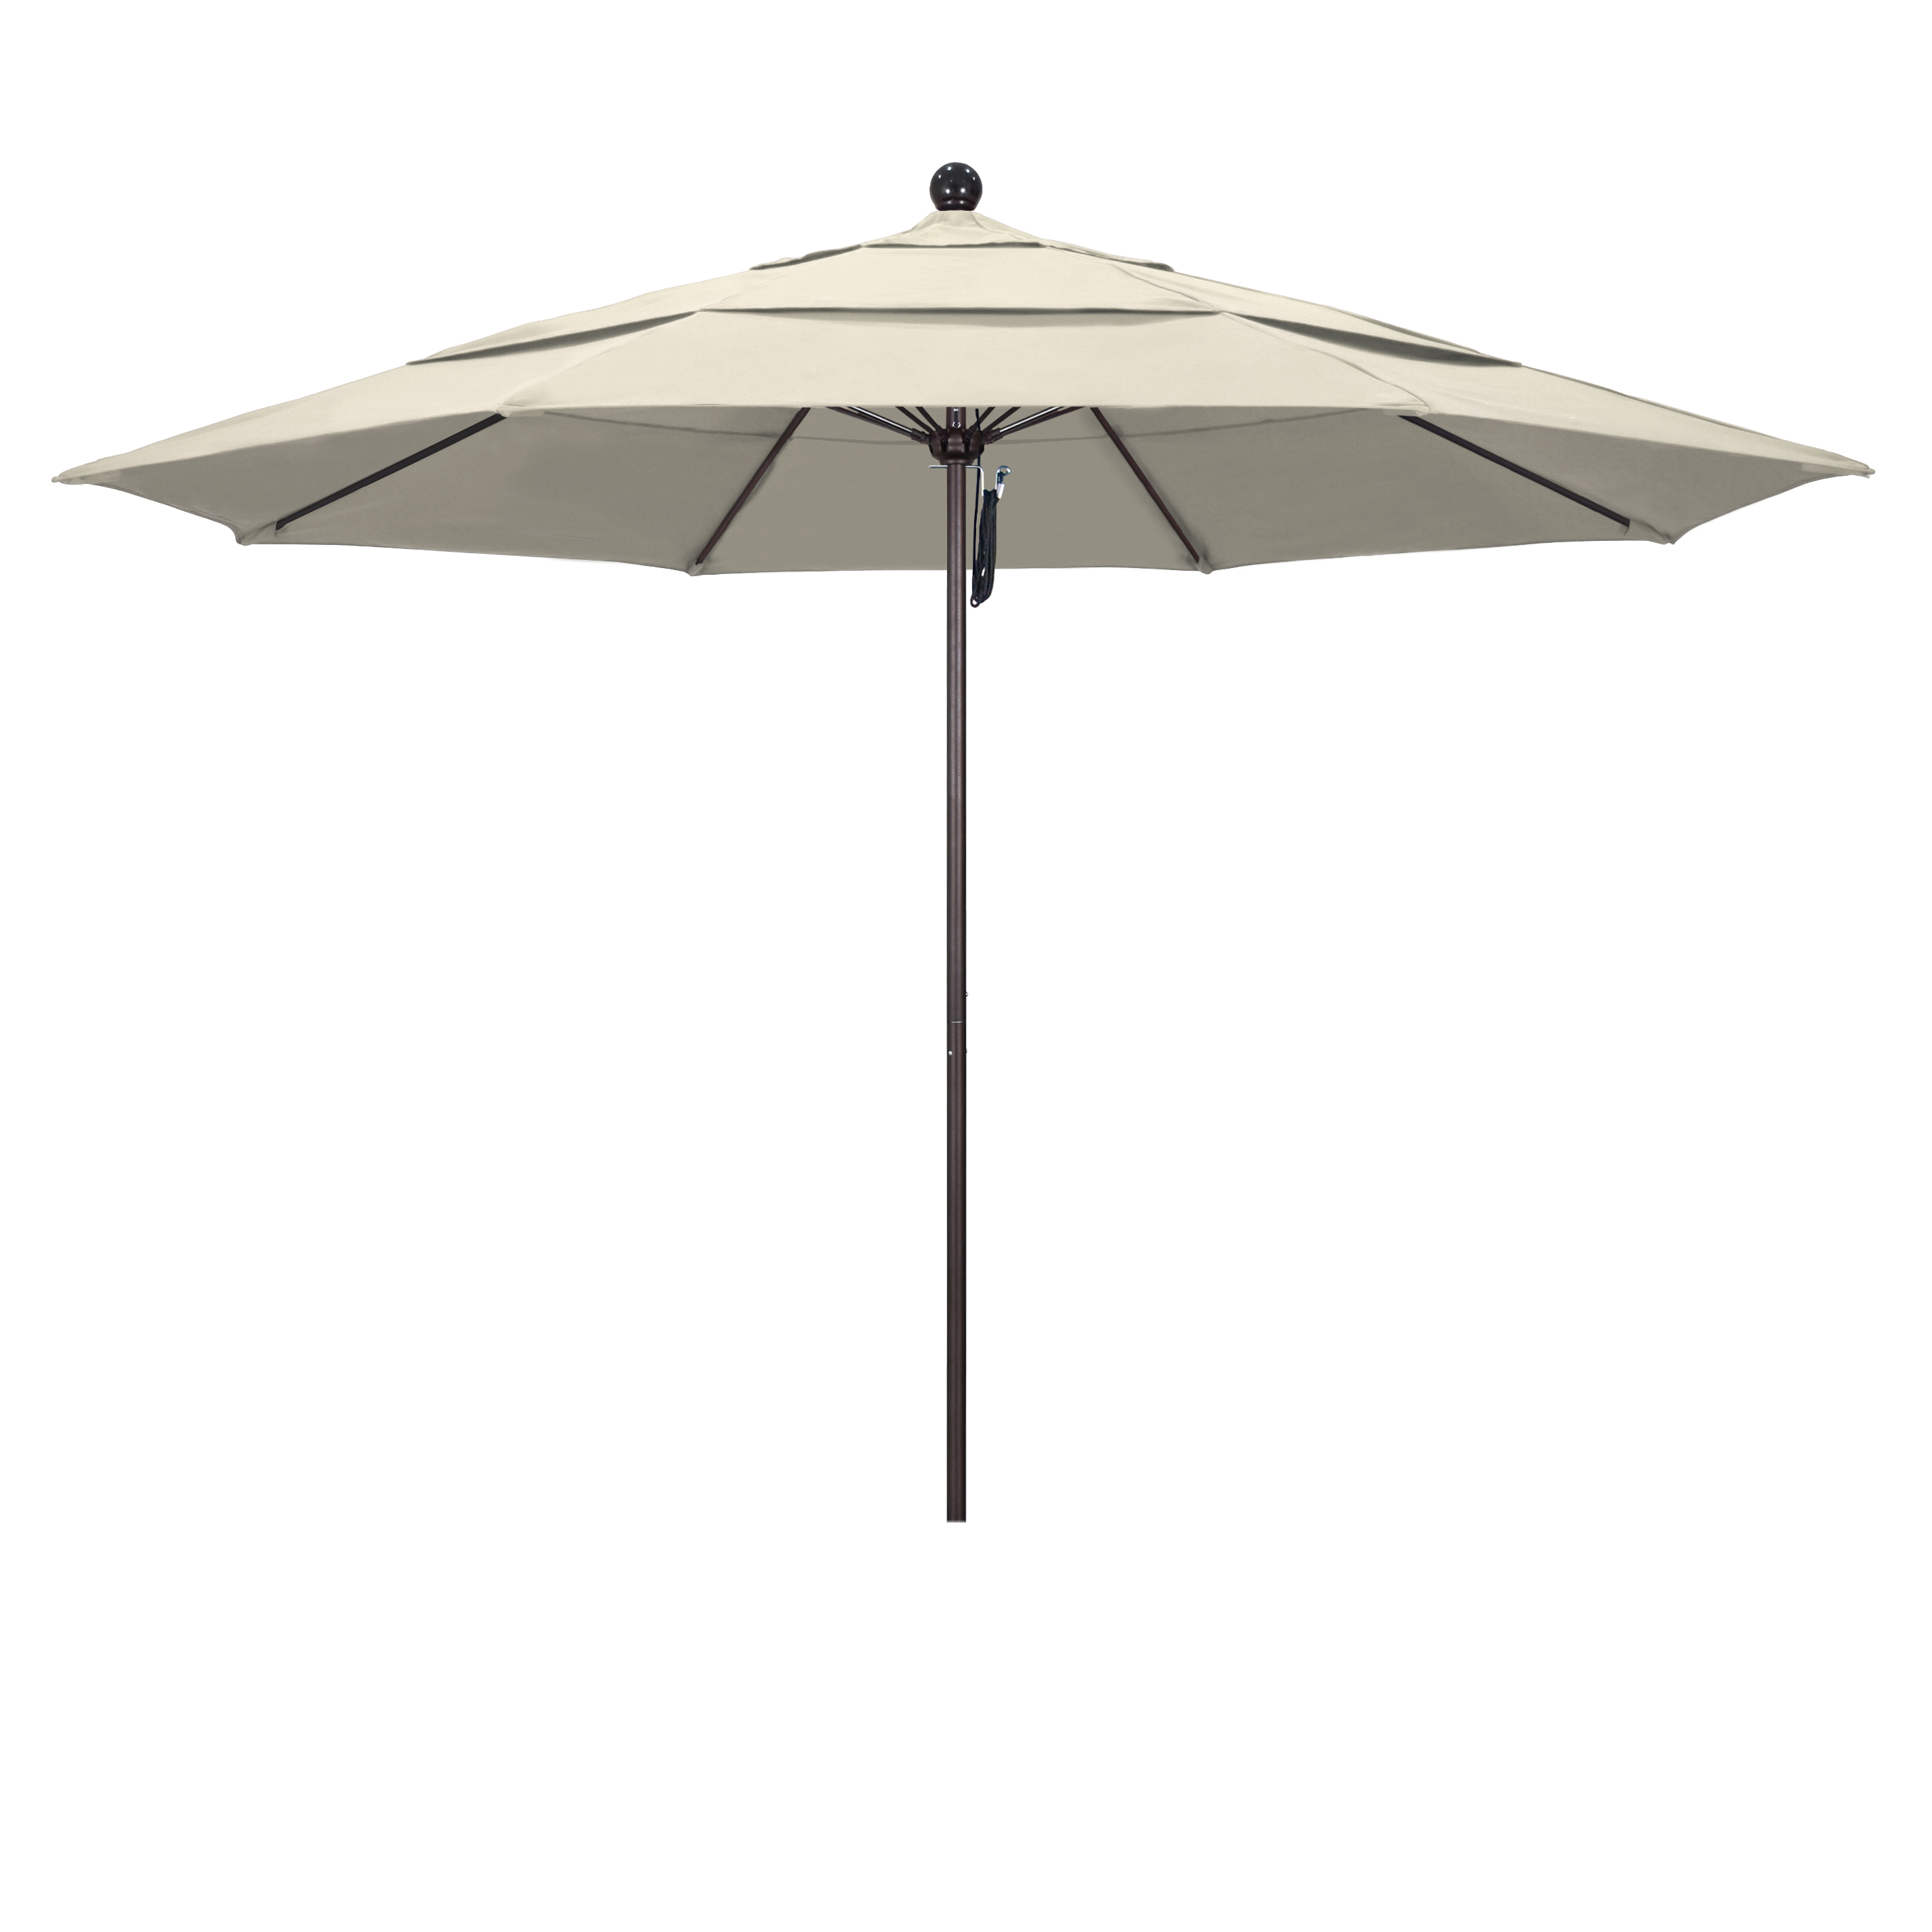 Picture of California Umbrella ALTO118117-F22-DWV 11 ft. Fiberglass Market Umbrella PO DVent Bronze-Olefin-Antique Beige